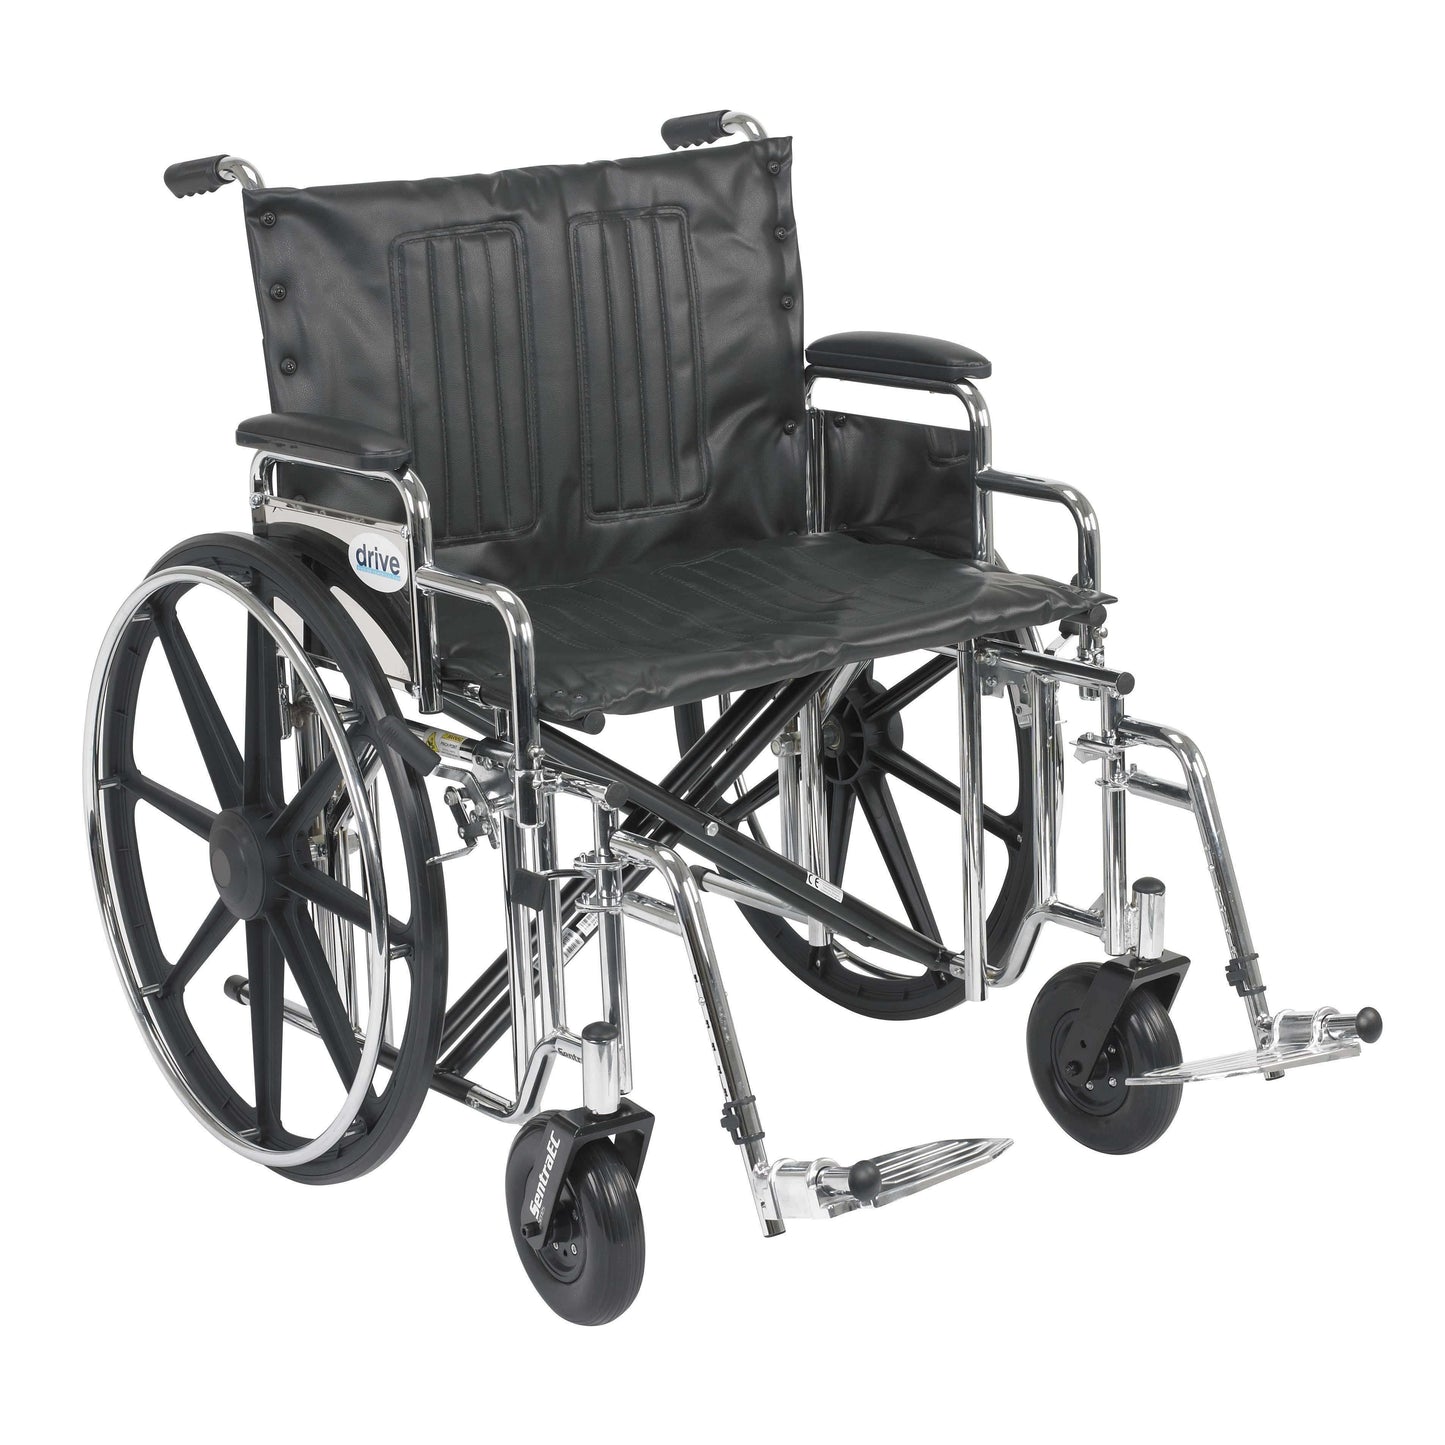 Drive std24dda-sf Sentra Extra Heavy Duty Wheelchair, Detachable Desk Arms, Swing away Footrests, 24" Seat